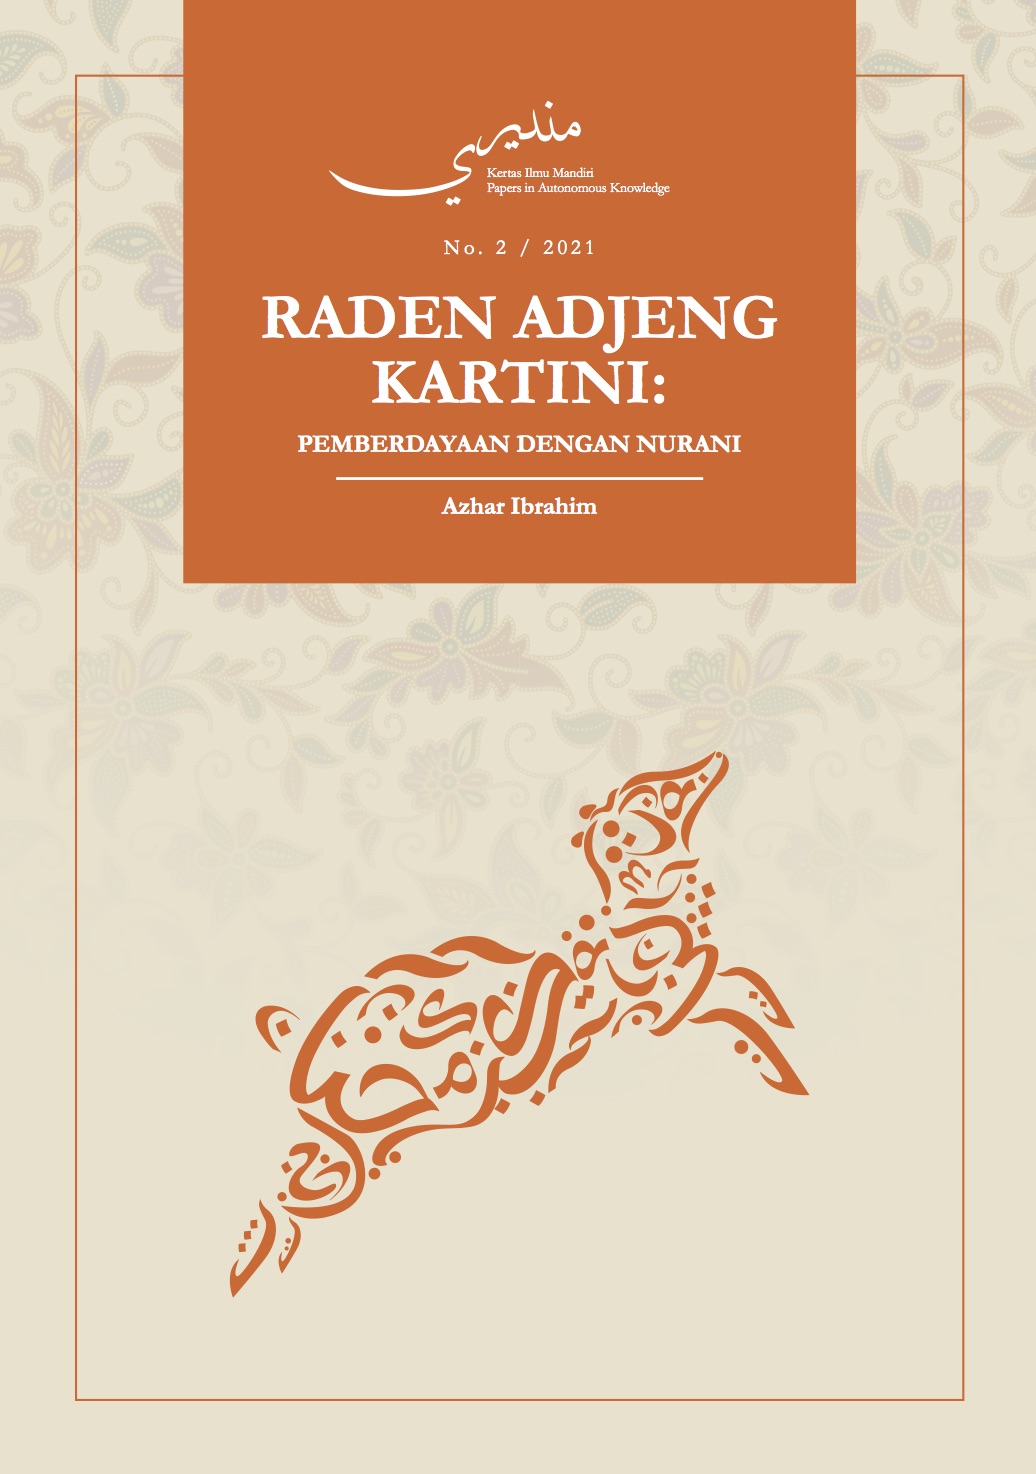 Adjeng kartini raden karya R.A. Kartini